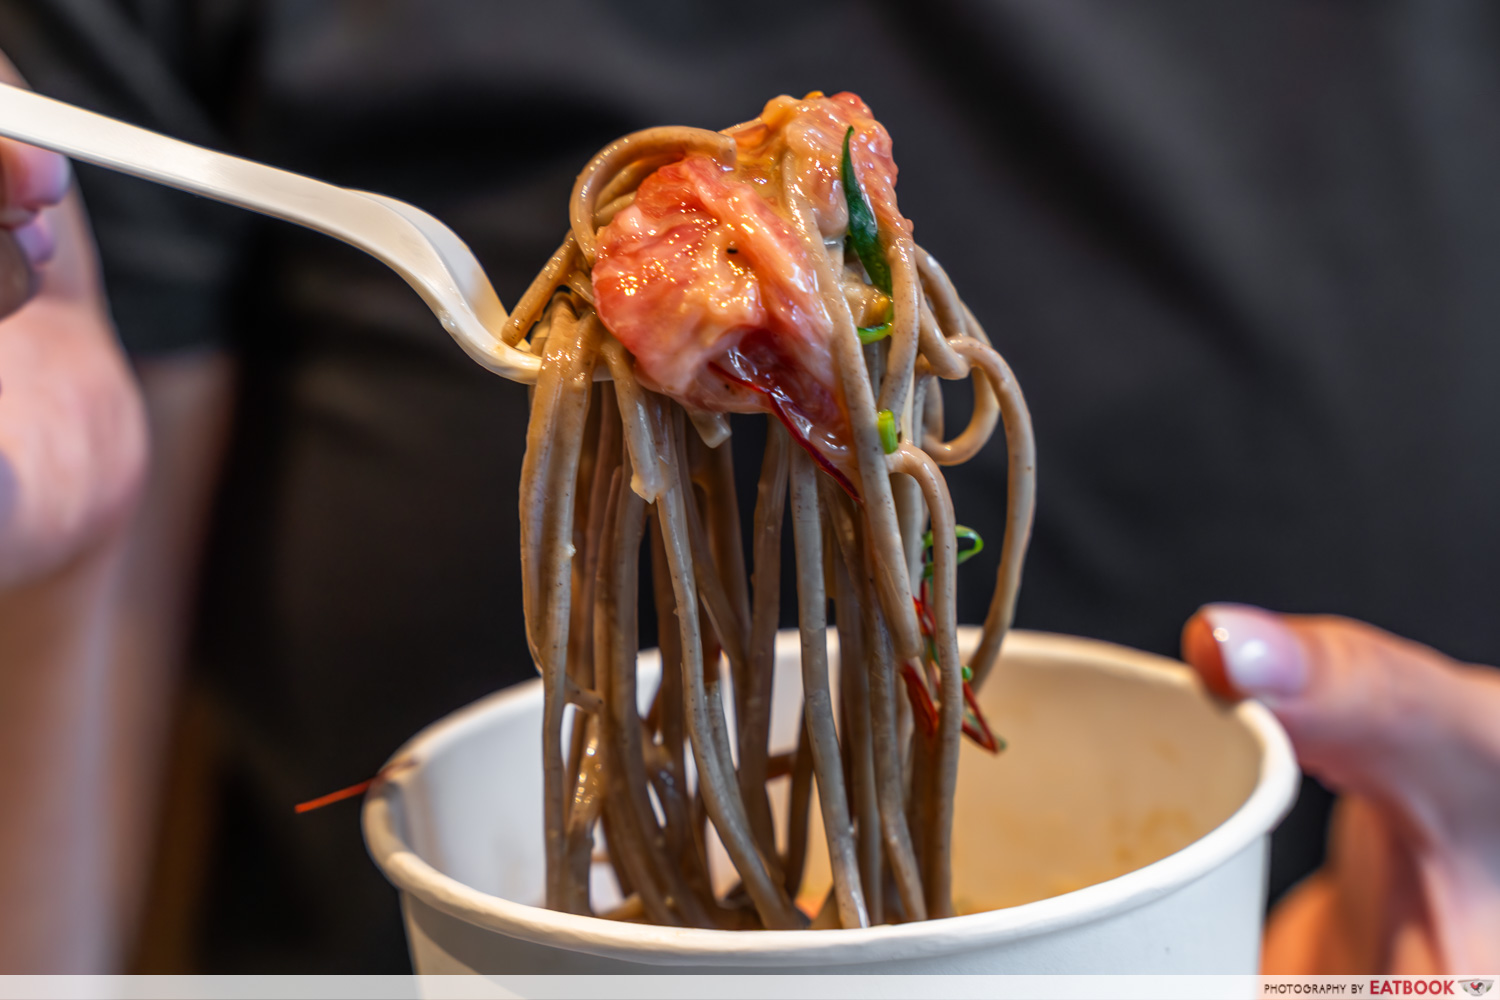 draft land - wagyu cold noodles on fork